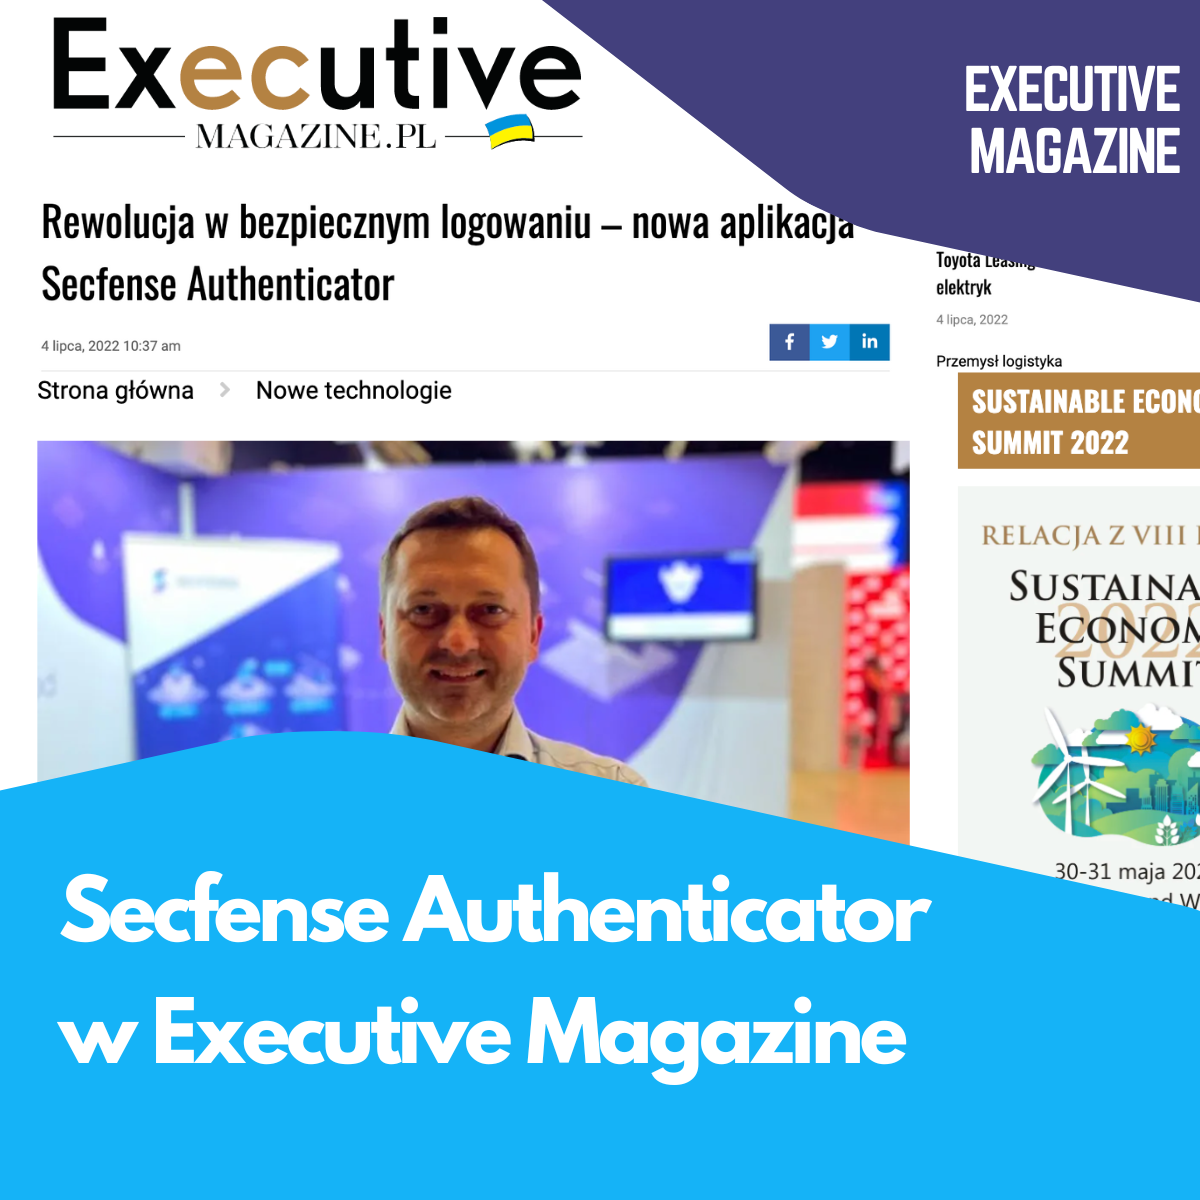 Secfense Authenticator w Executive Magazine